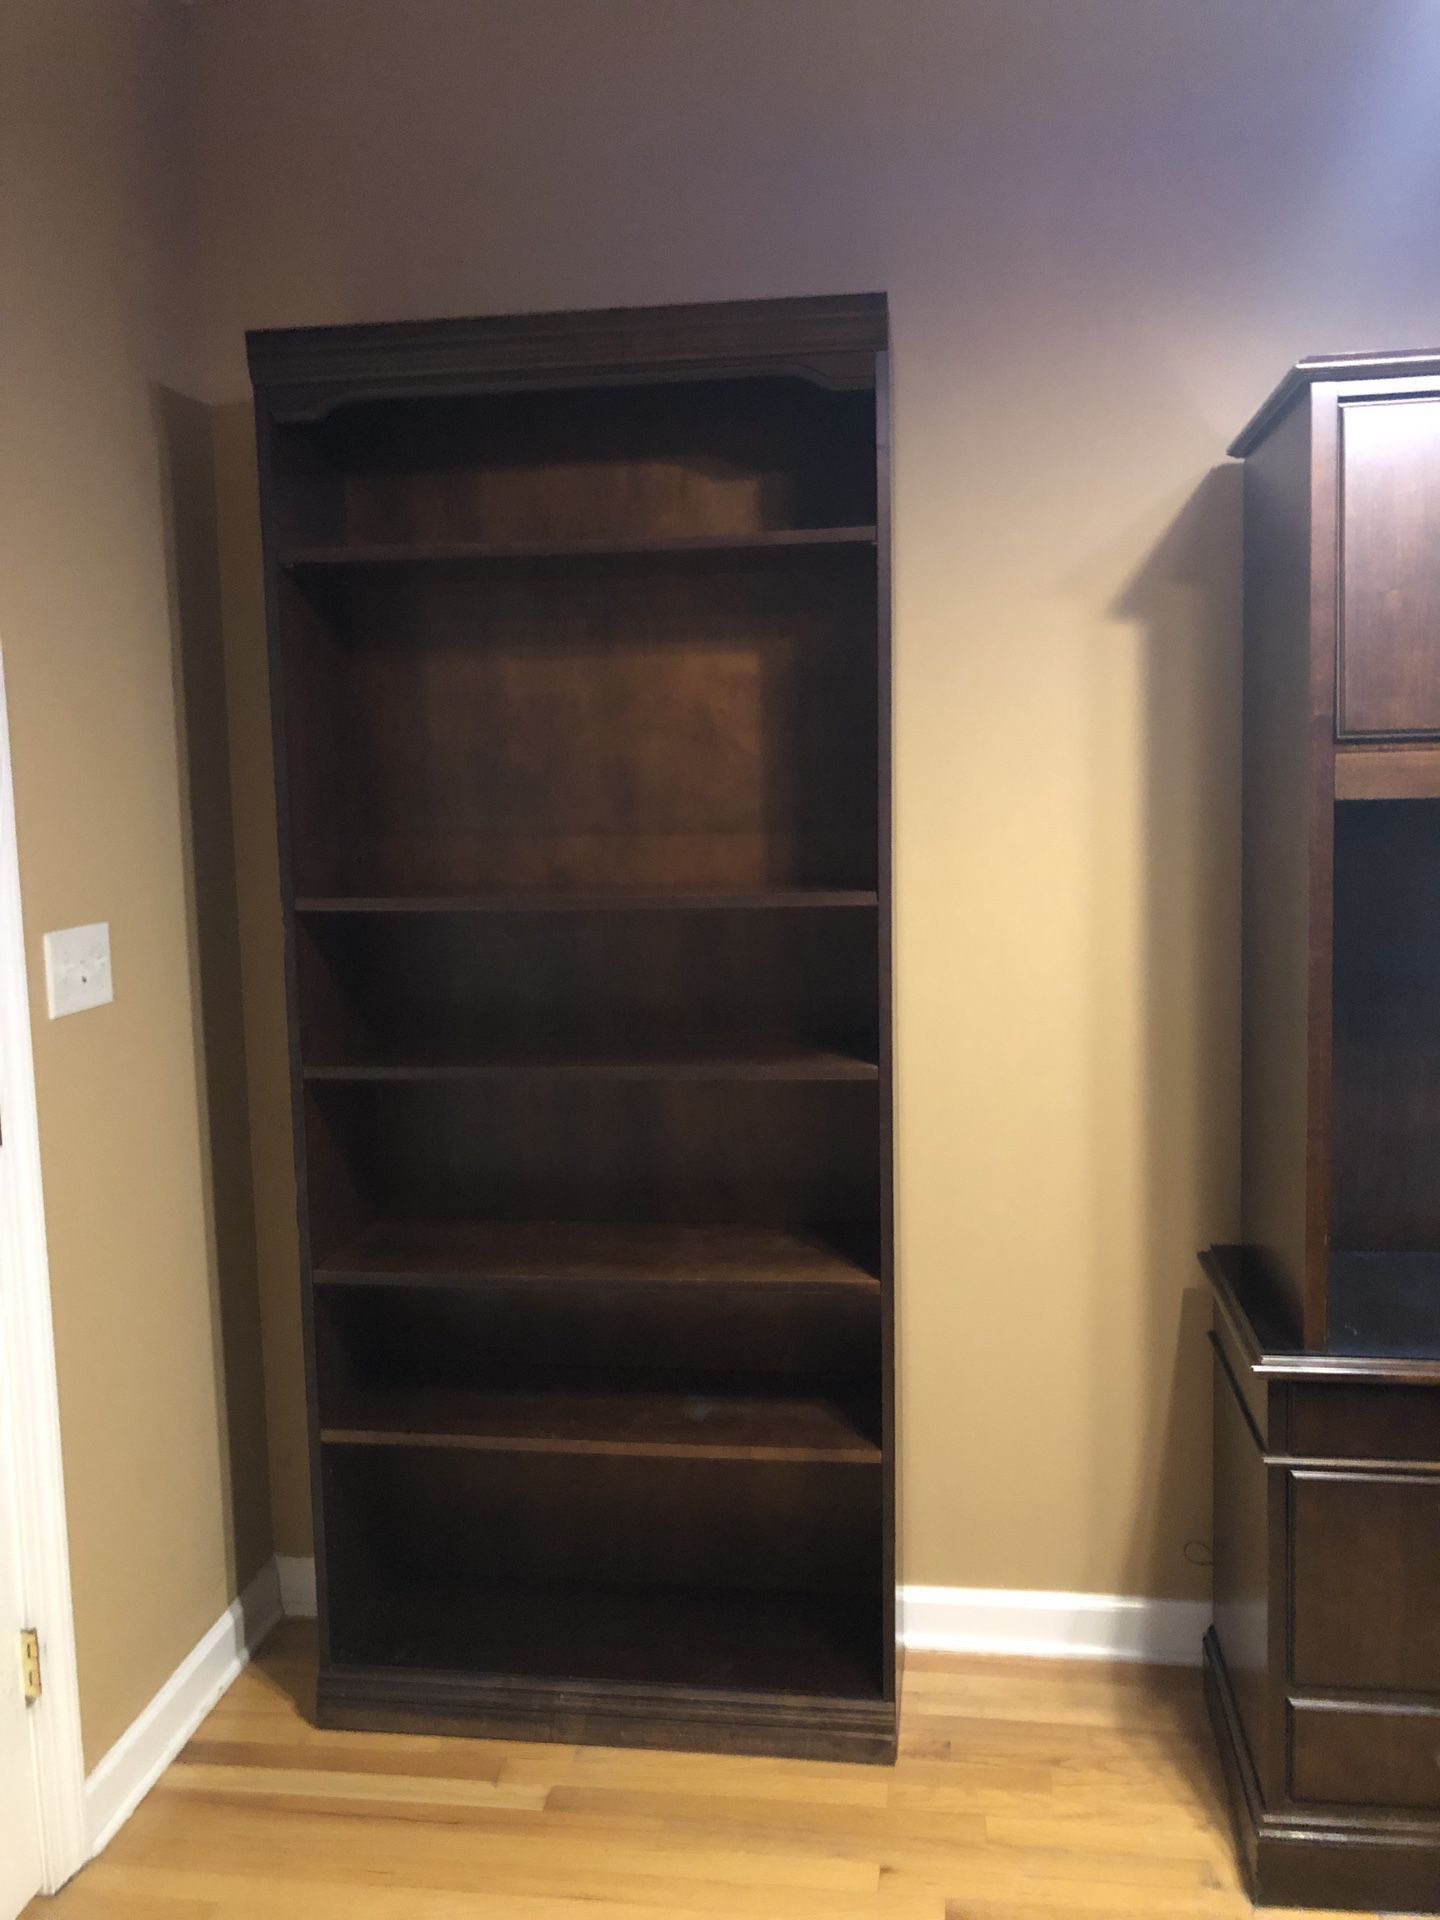 Executive, dark wood 6’ bookshelf. Solid wood, quality construction. wood, dark stain. Beautiful